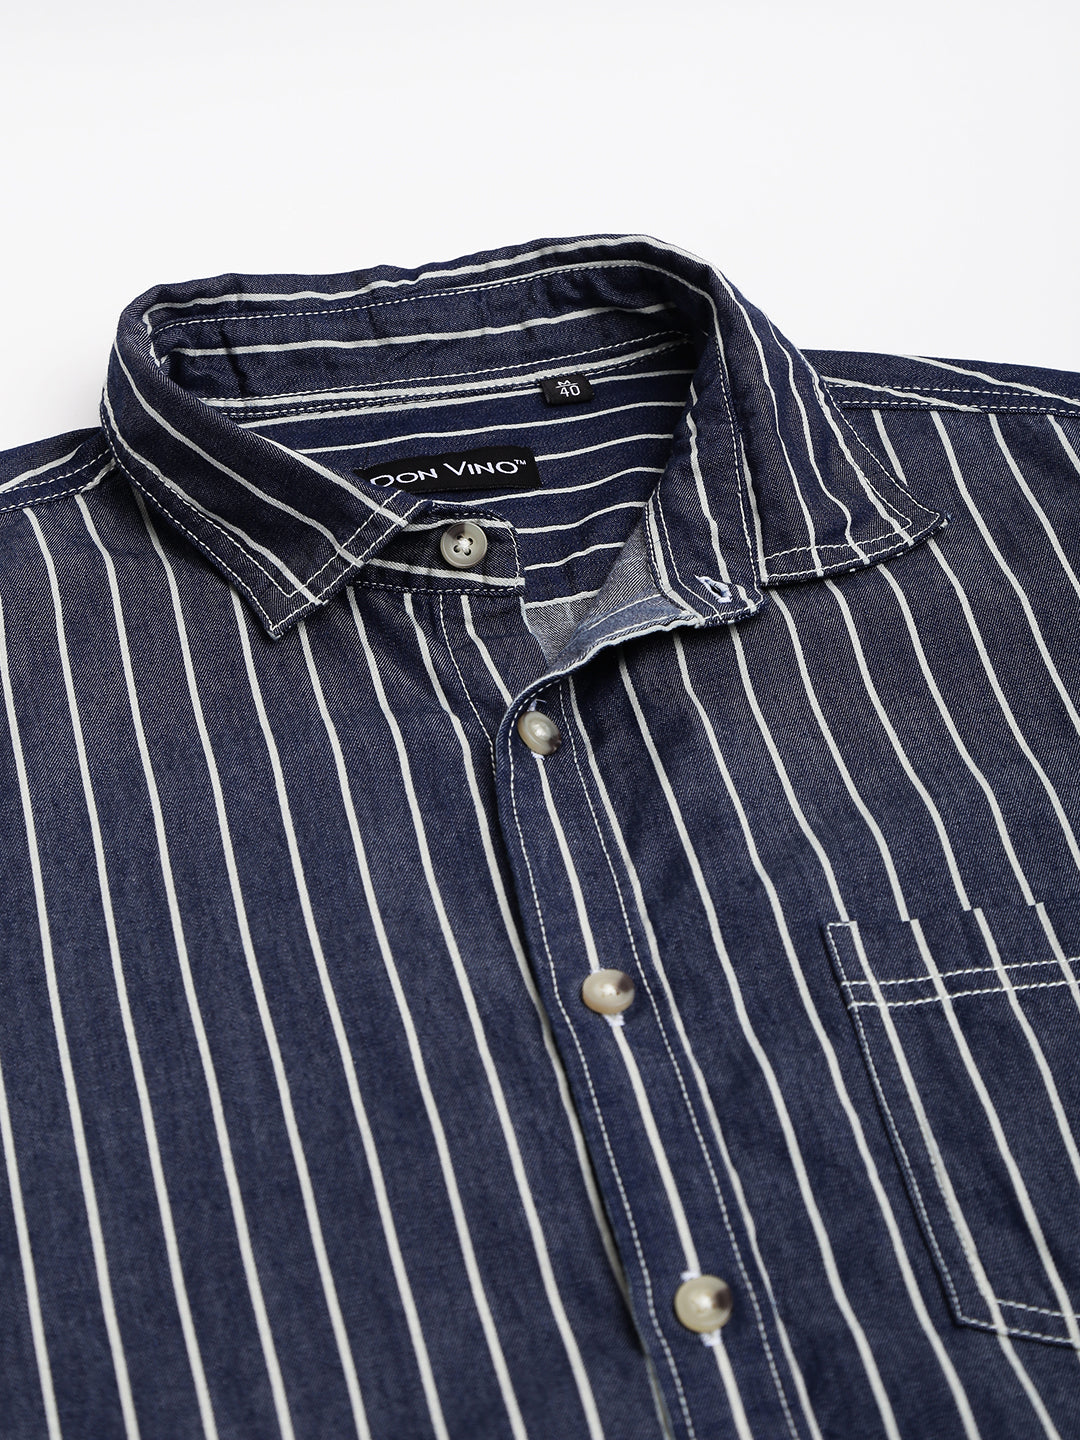 Don Vino Men's Stripes Blue Shirt